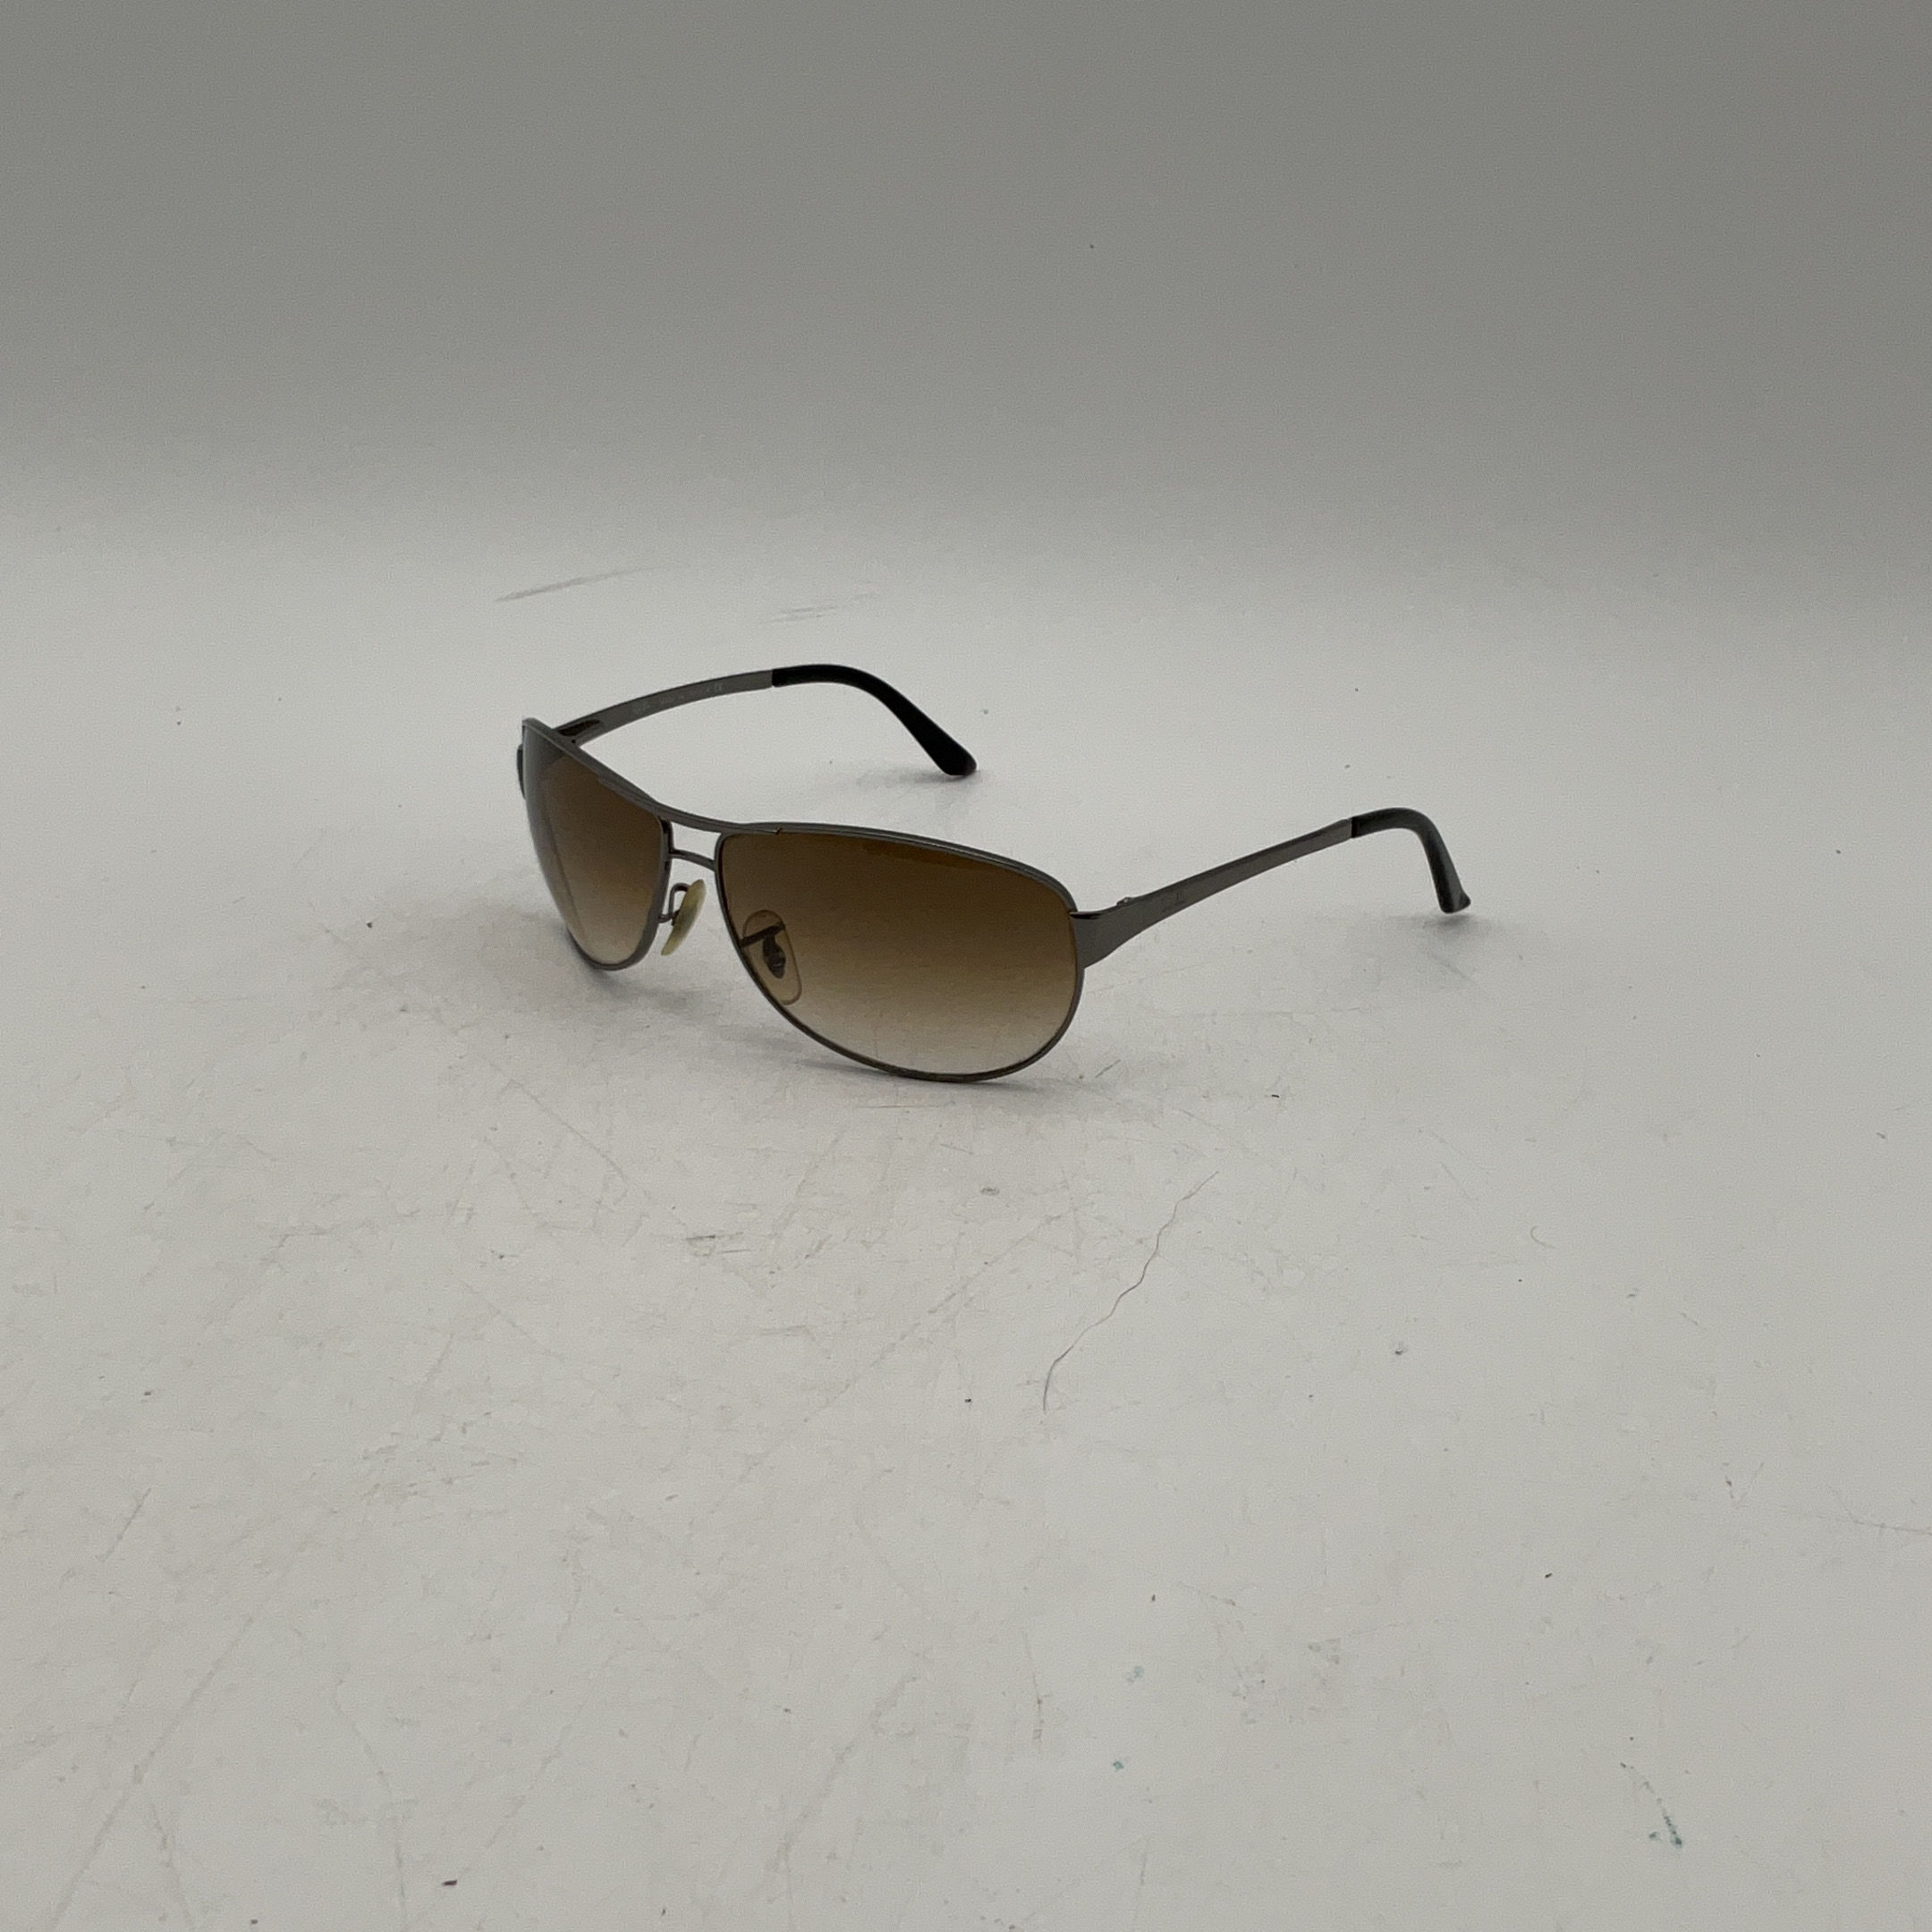 Buy the Mens Black Brown Polycarbonate Frame Gradient Aviator Sunglasses